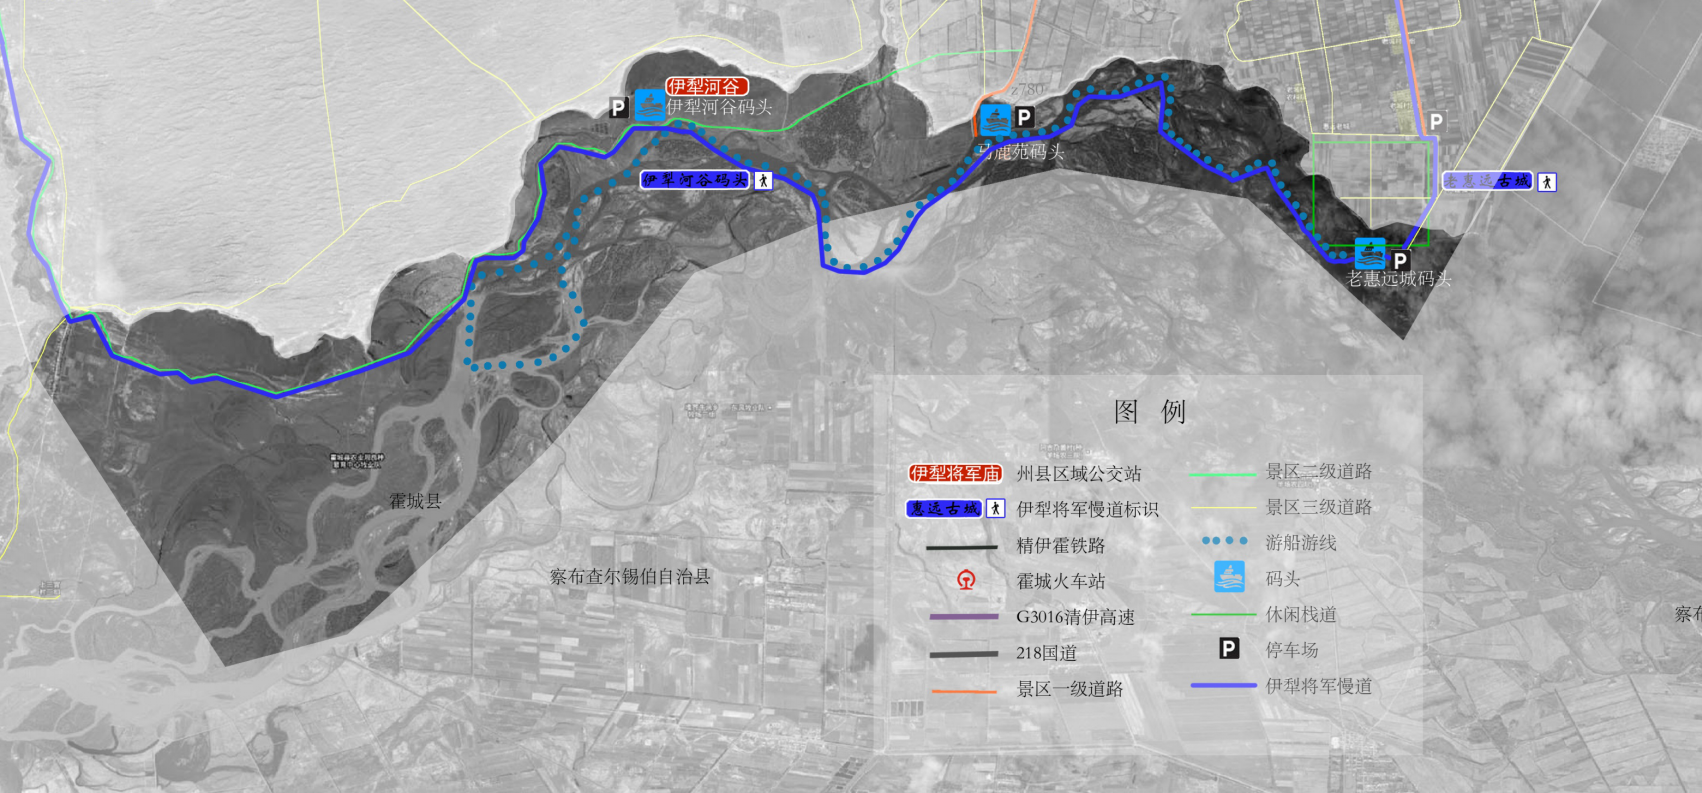 Conceptual rejuvenation planning and design of Huiyuan ancient city in Yili Xinjiang(图11)